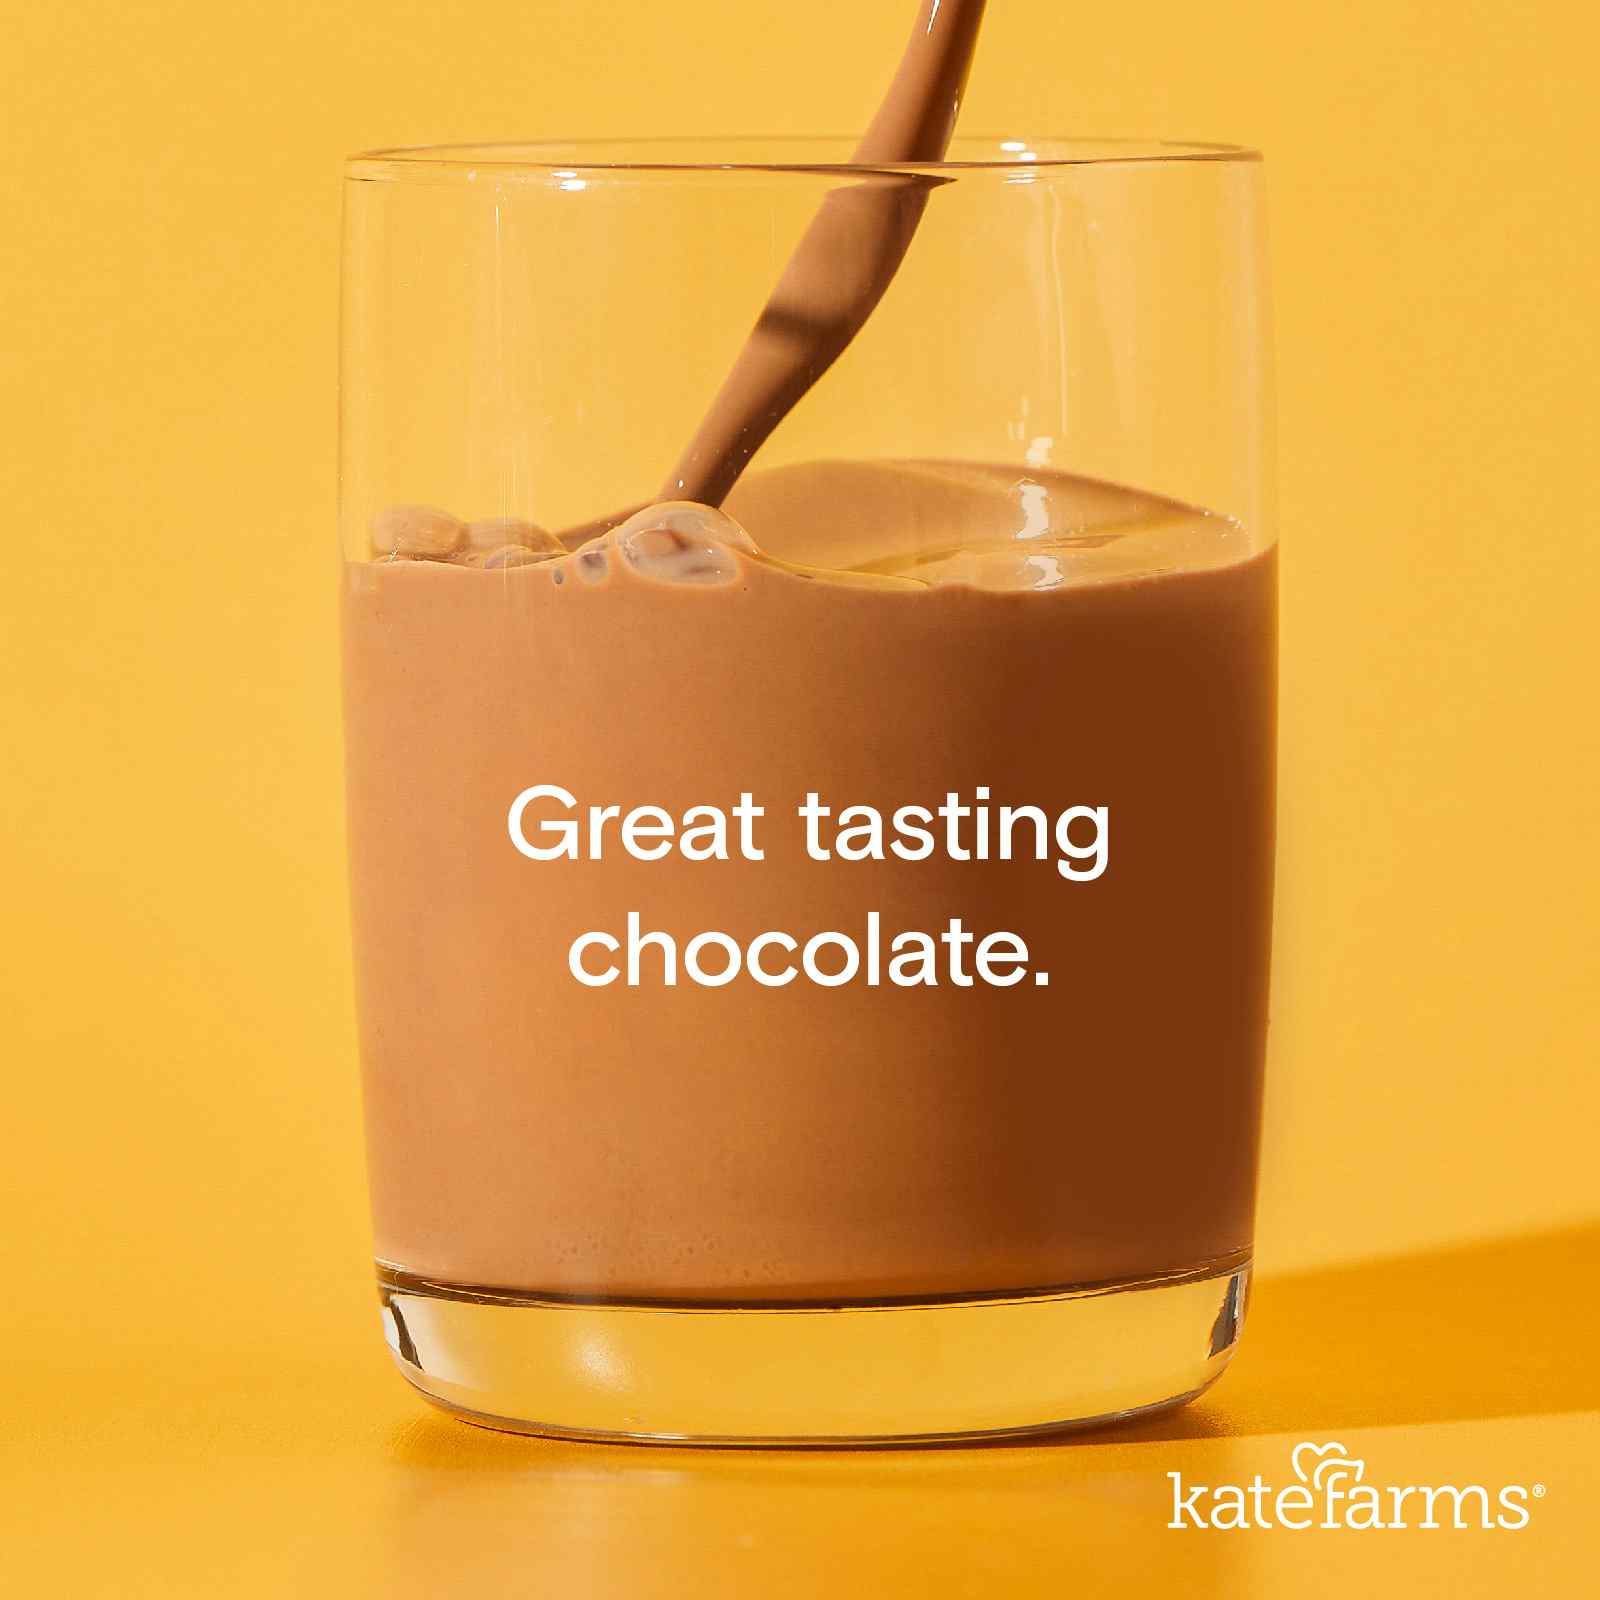 Kate Farms Nutrition Shake, Chocolate, 11 oz.